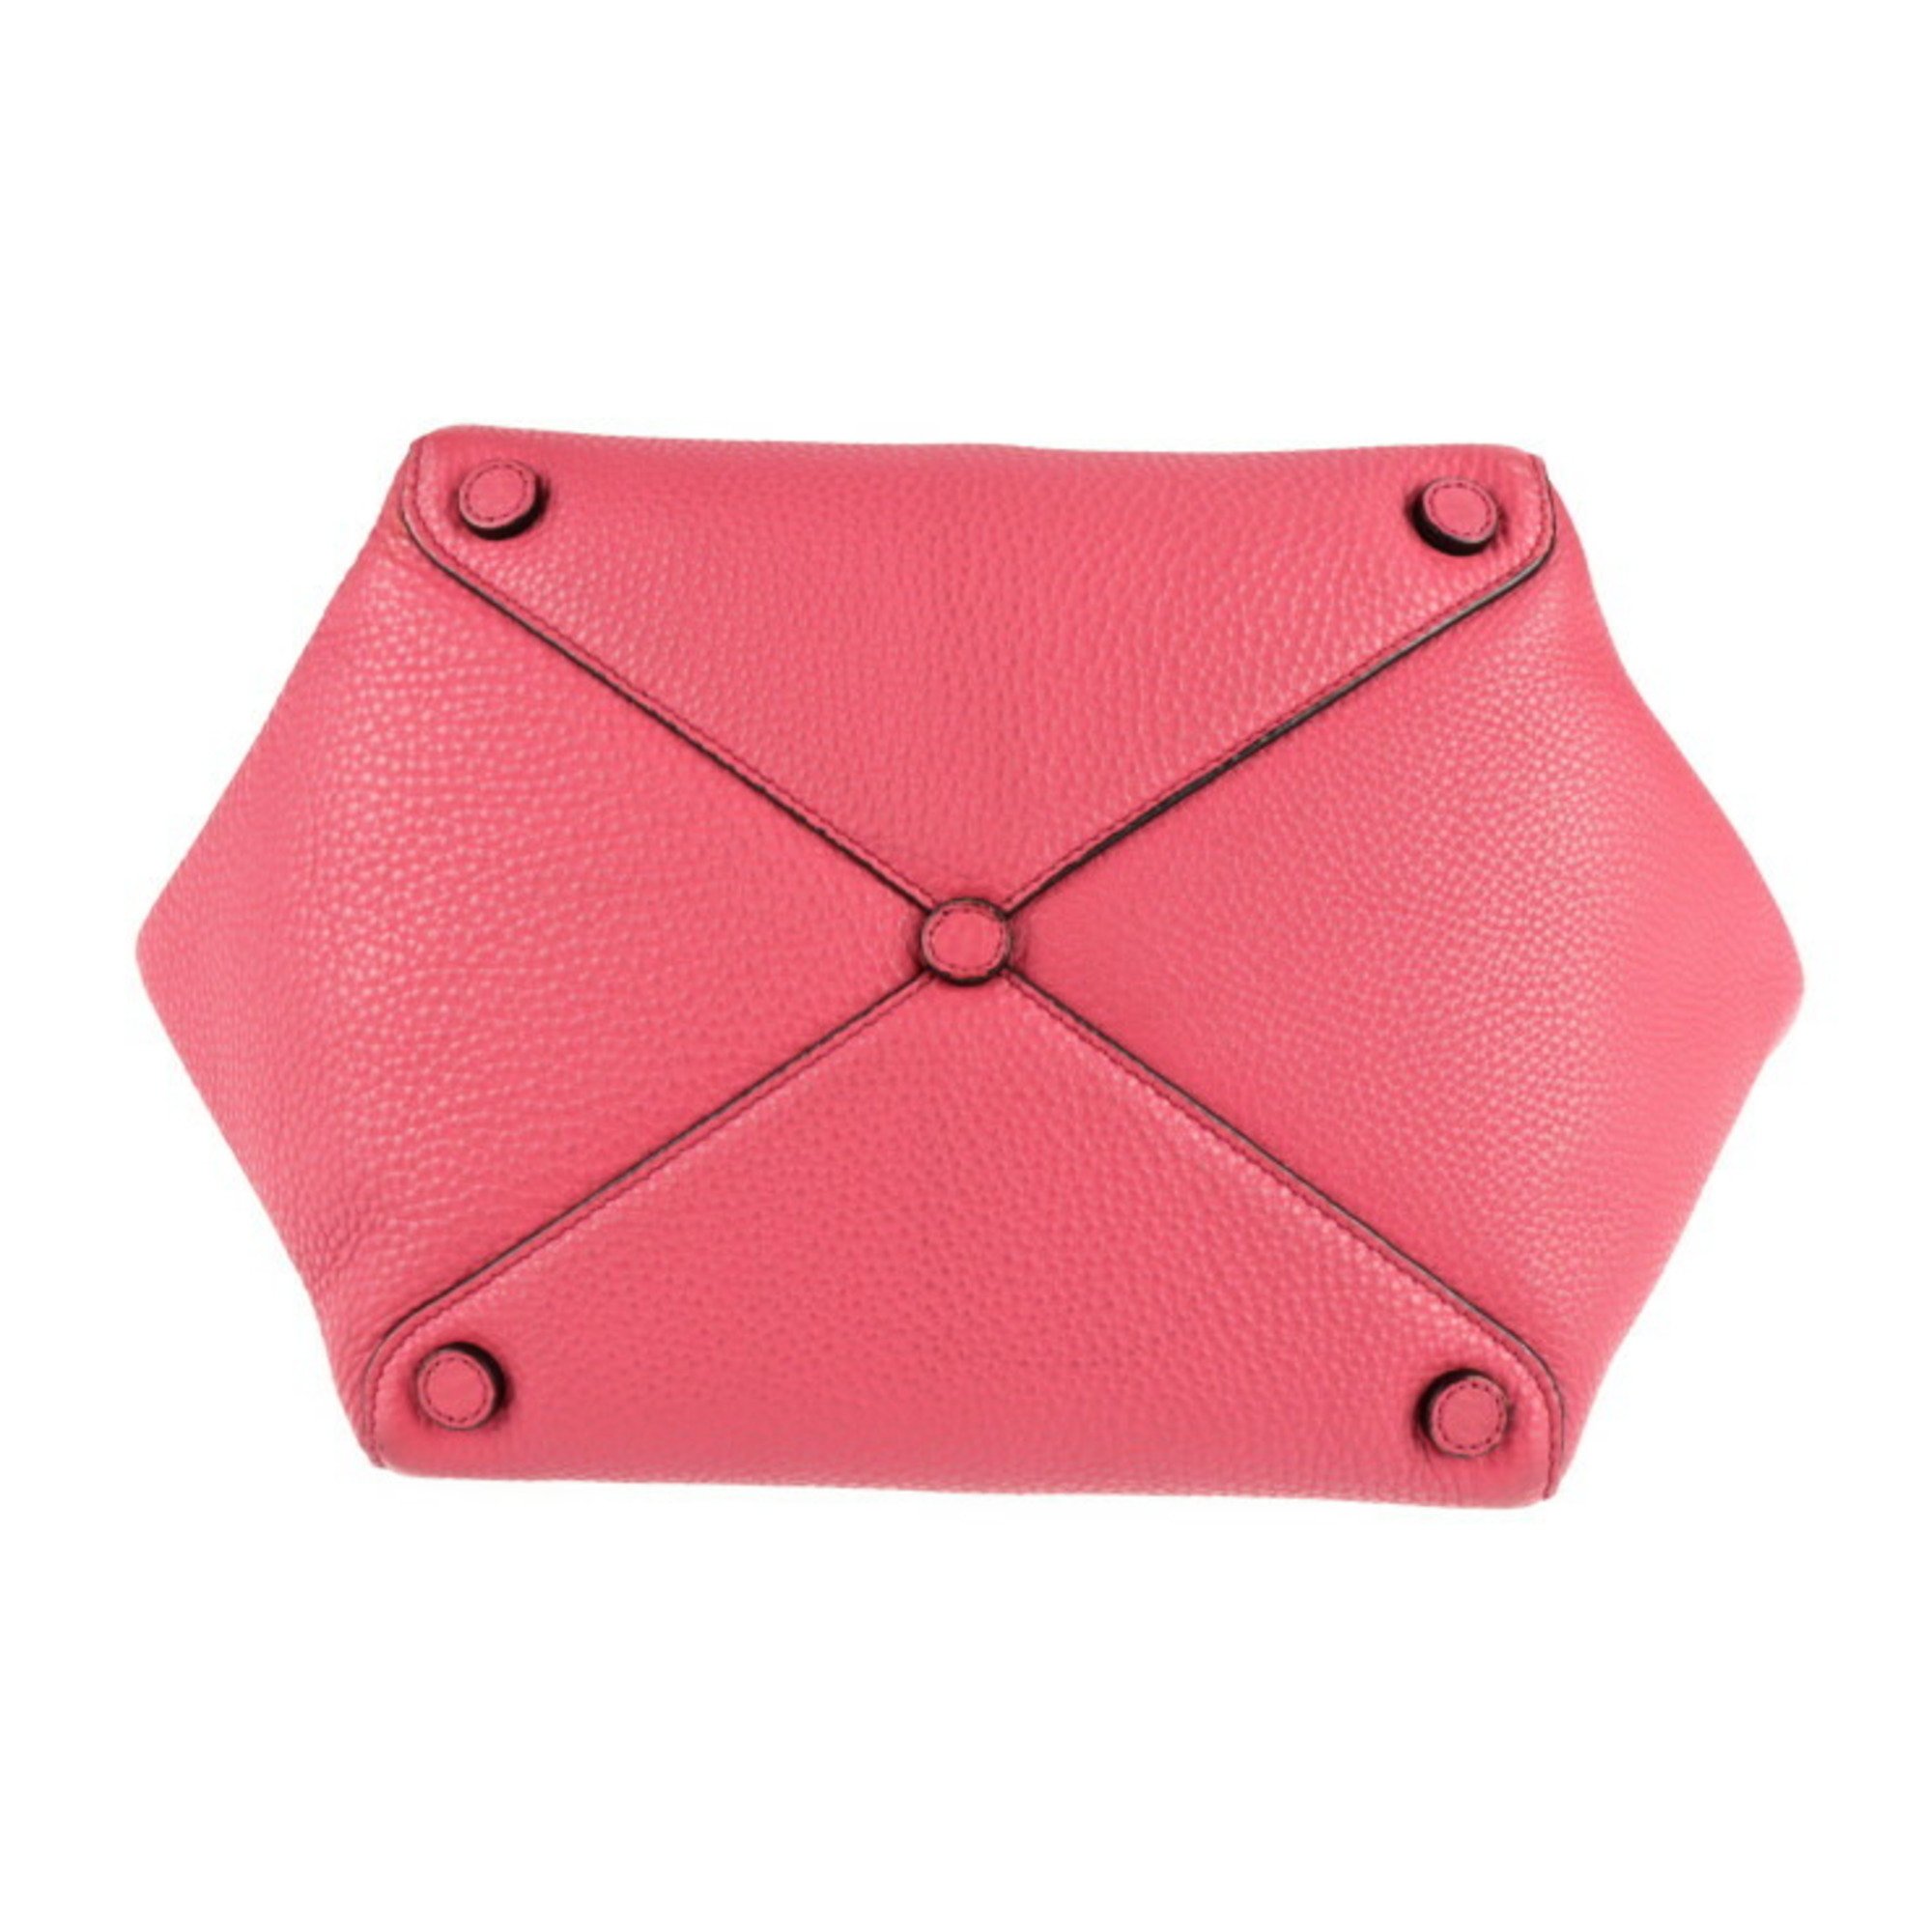 PRADA Prada Vitello Dino VITELLO DAINO tote bag BR5092 leather PEONIA Peonia pink series triangle plate